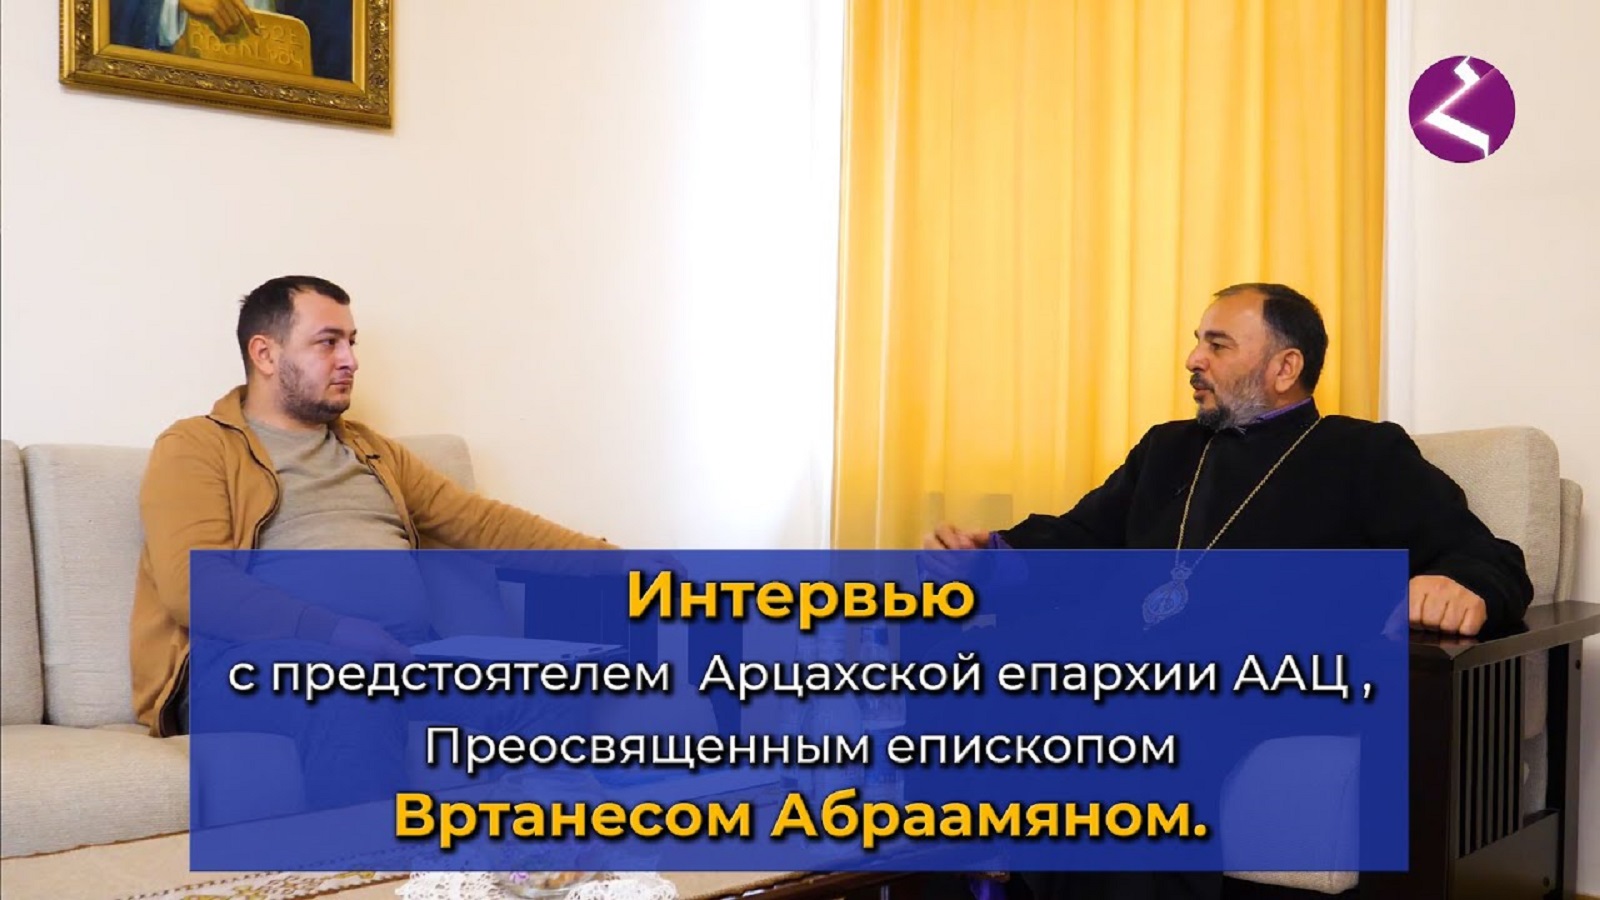 Интервью/Глава Арцахской Епархии ААЦ Врданес Абраамян/HAYK media